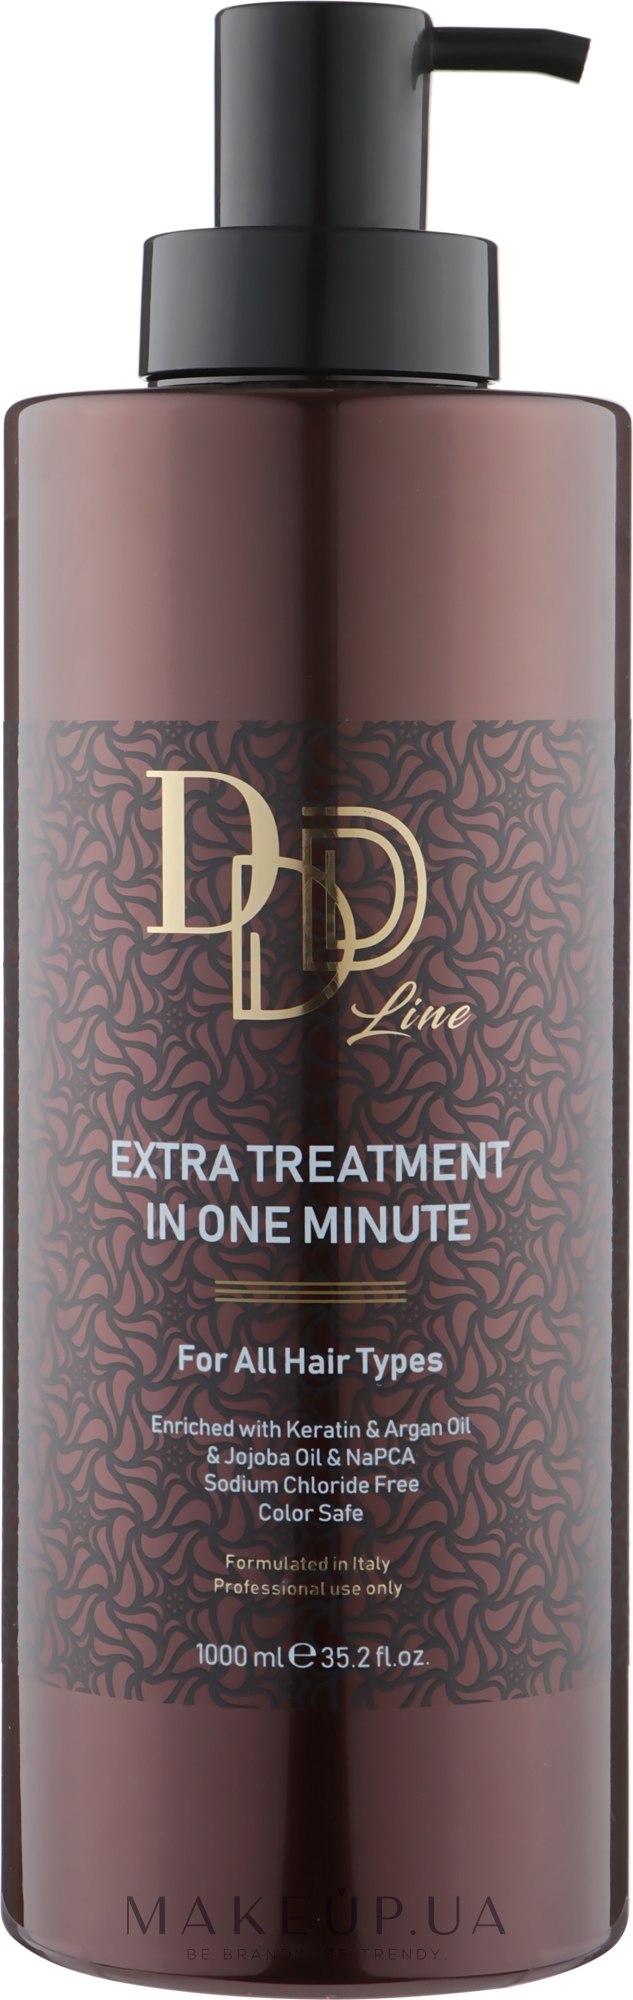 Кондиционер для волос "Экстратерапия за одну минуту" - Clever Hair Cosmetics 3D Line Extra Treatment In One Minute — фото 1000ml